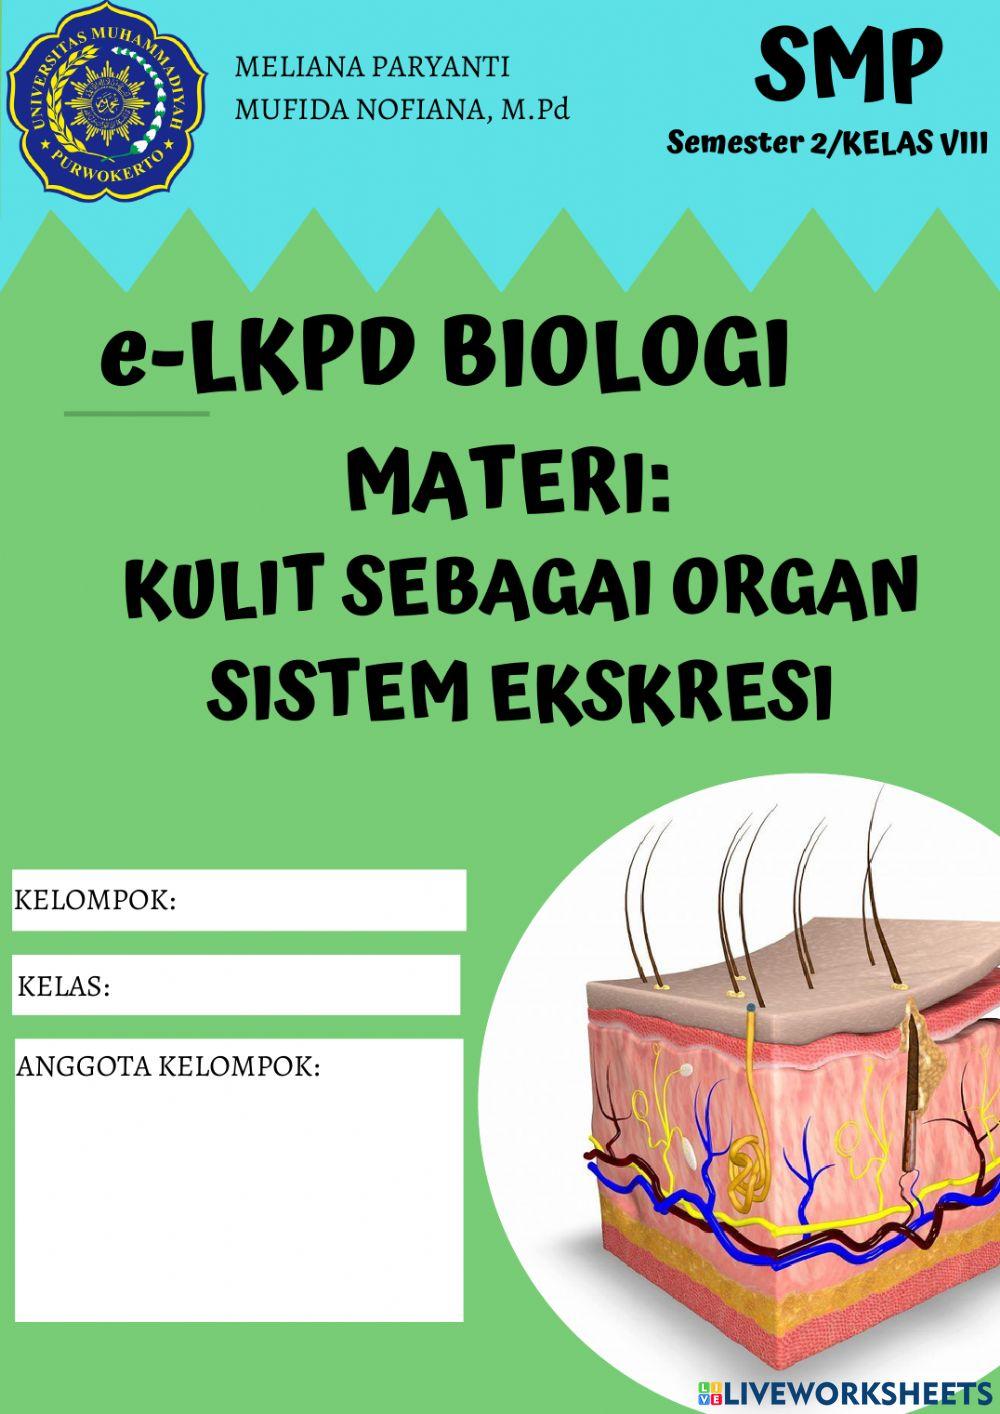 E-LKPD Kulit Sebagai Organ Sistem Ekskresi